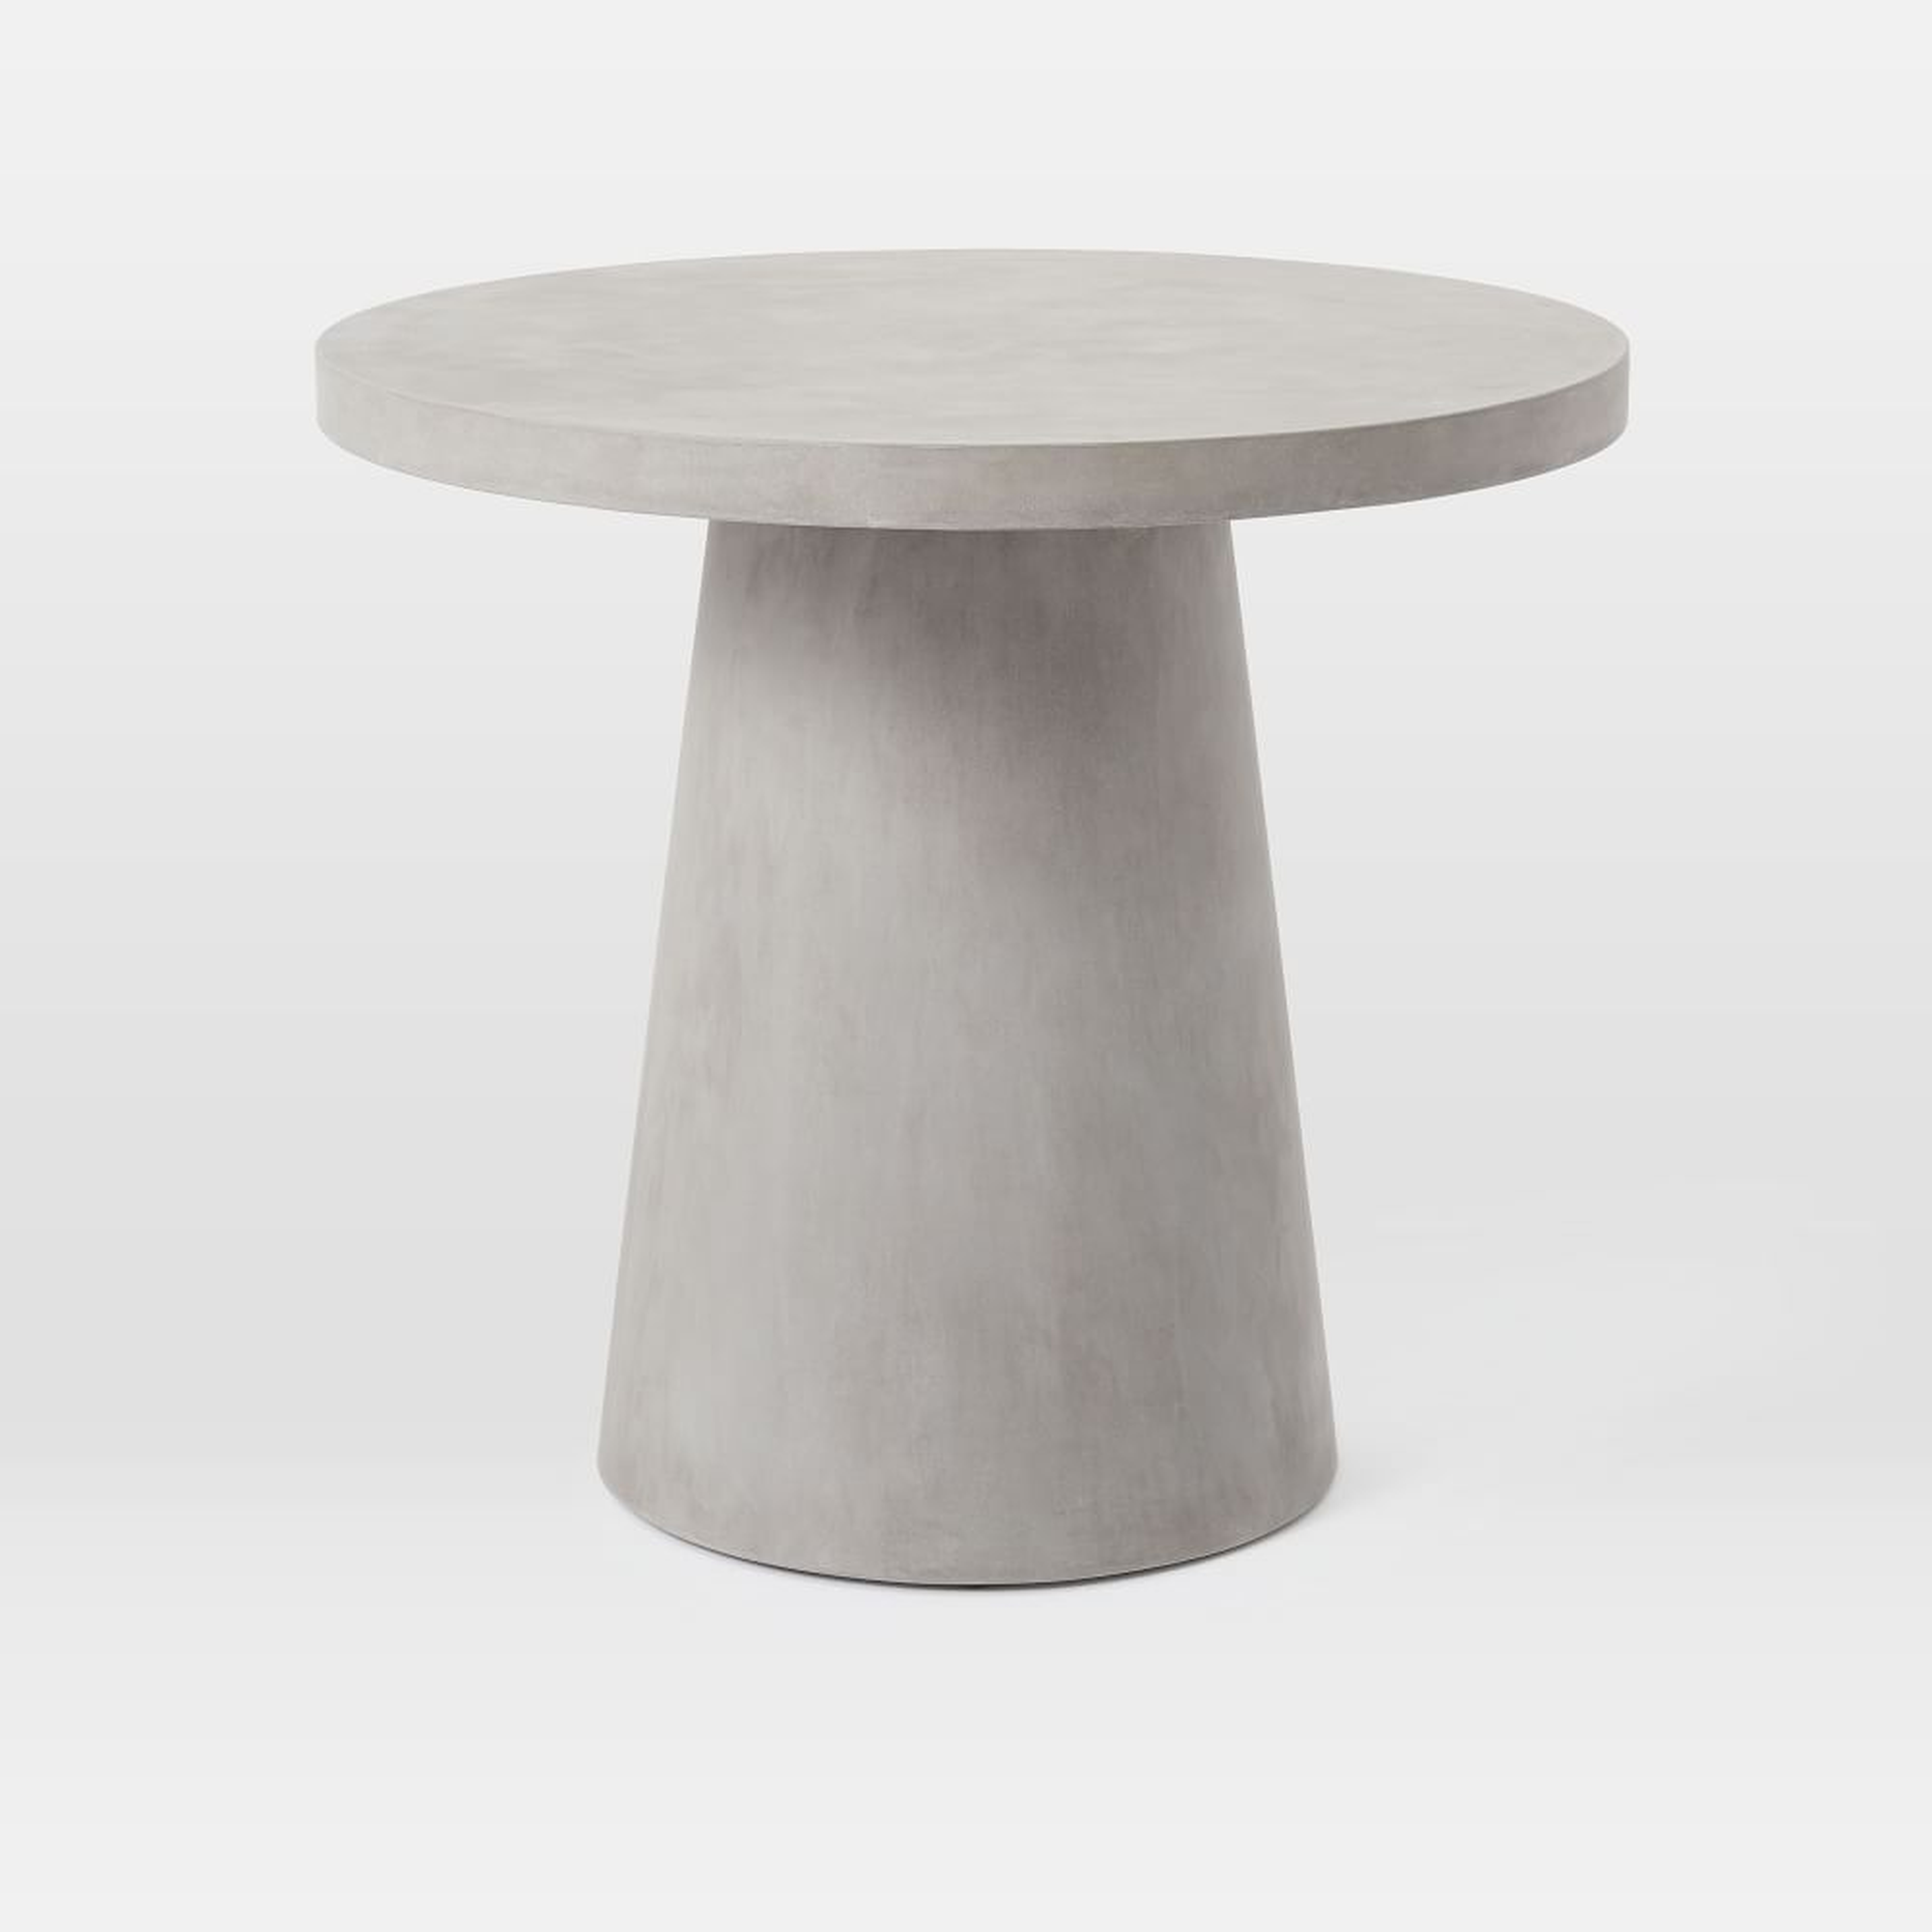 Pedestal Outdoor Bistro Table, 32", Gray - West Elm